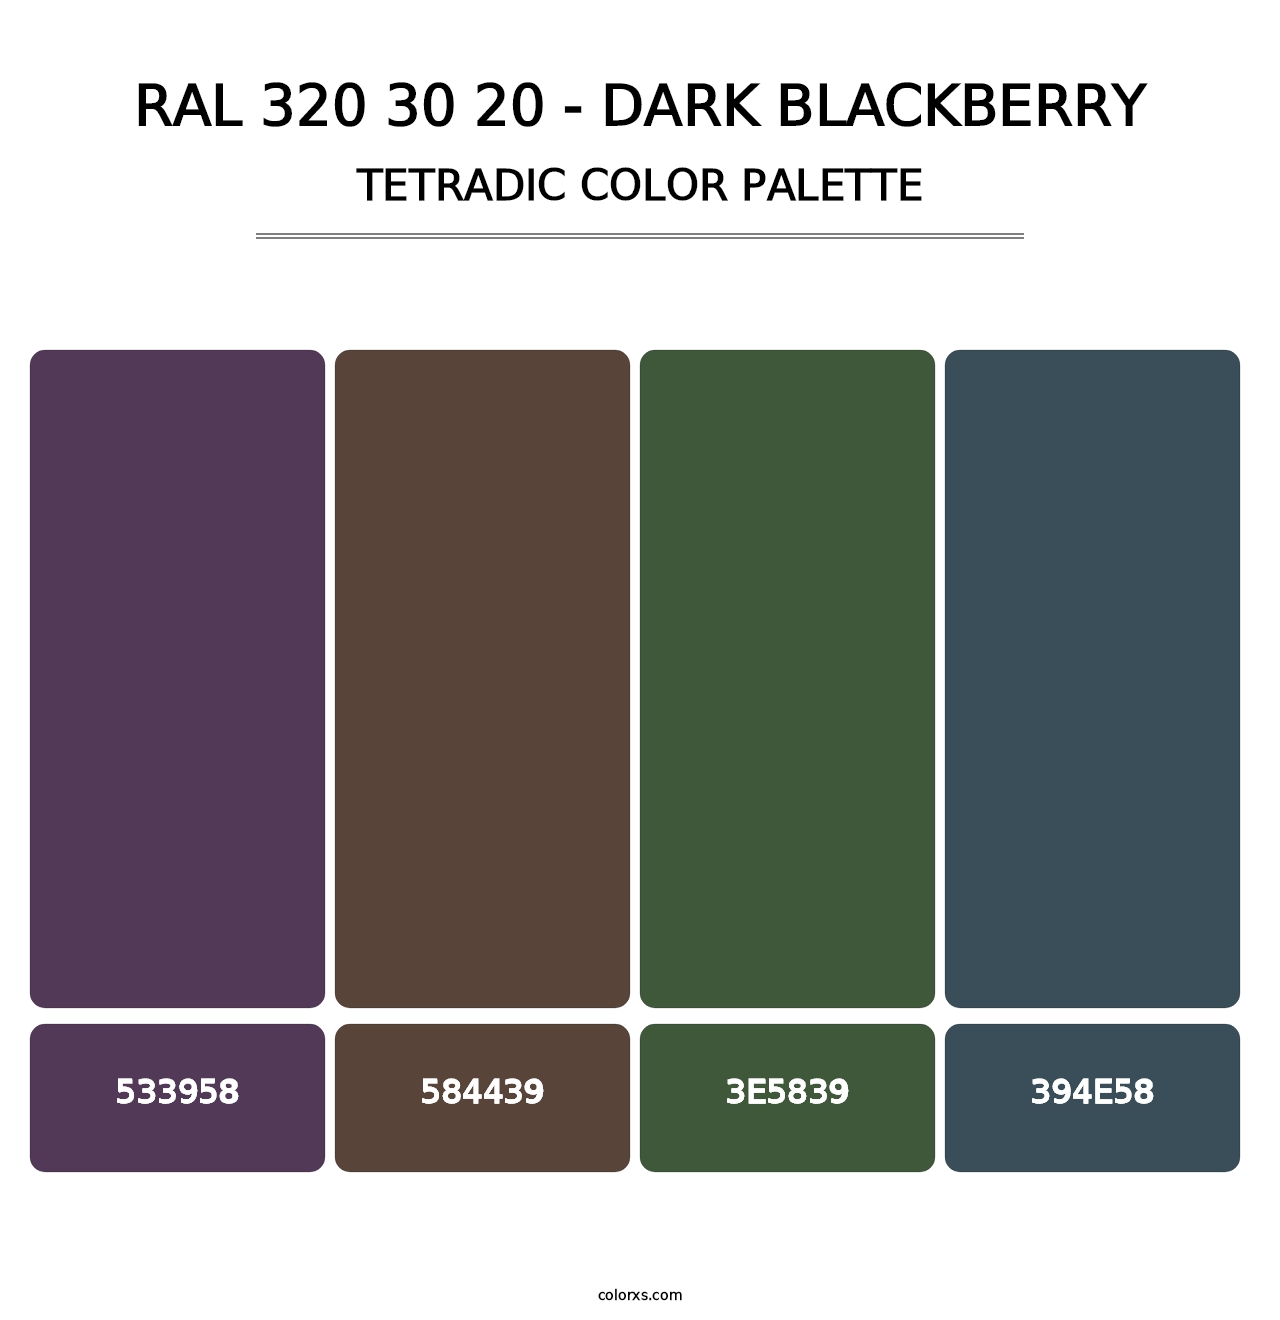 RAL 320 30 20 - Dark Blackberry - Tetradic Color Palette